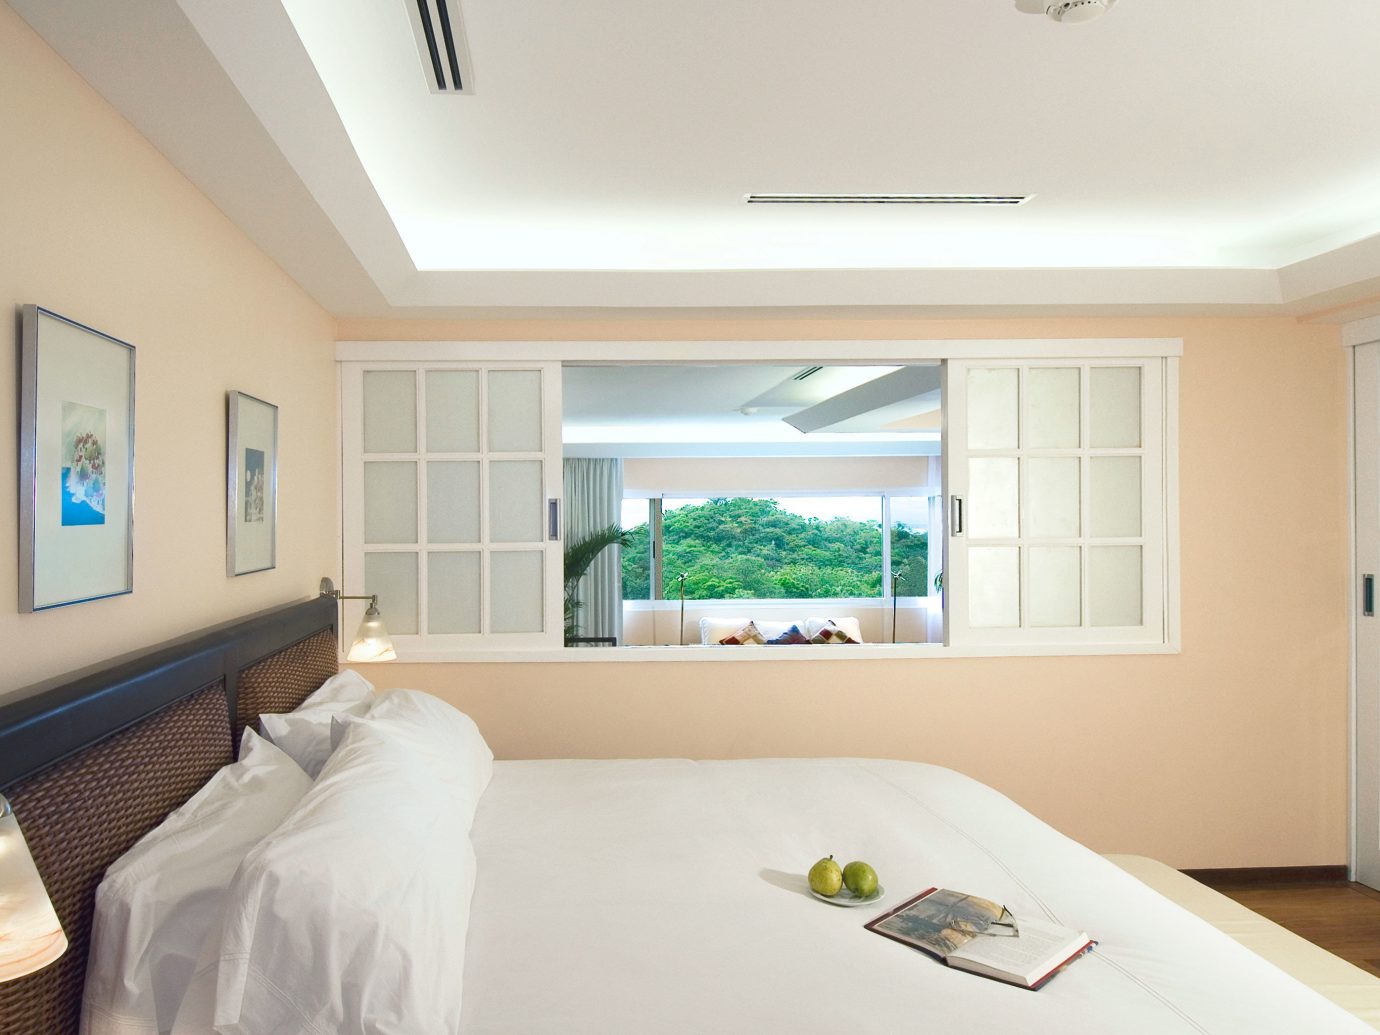 Gaia Hotel And Reserve Bedroom - Manuel Antonio, Costa Rica